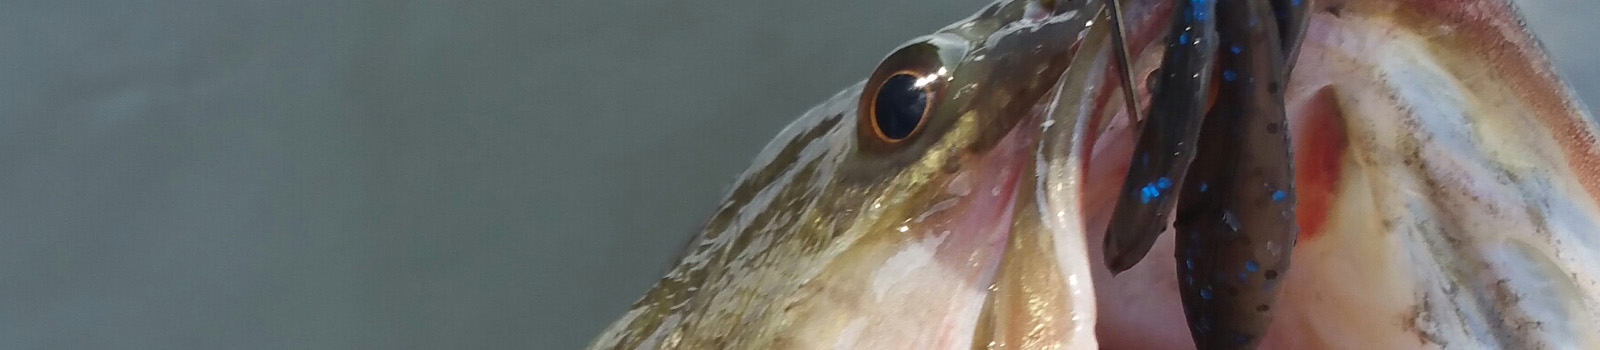 Crawfish Tricks for Late Summer Bass - Culprit Lures